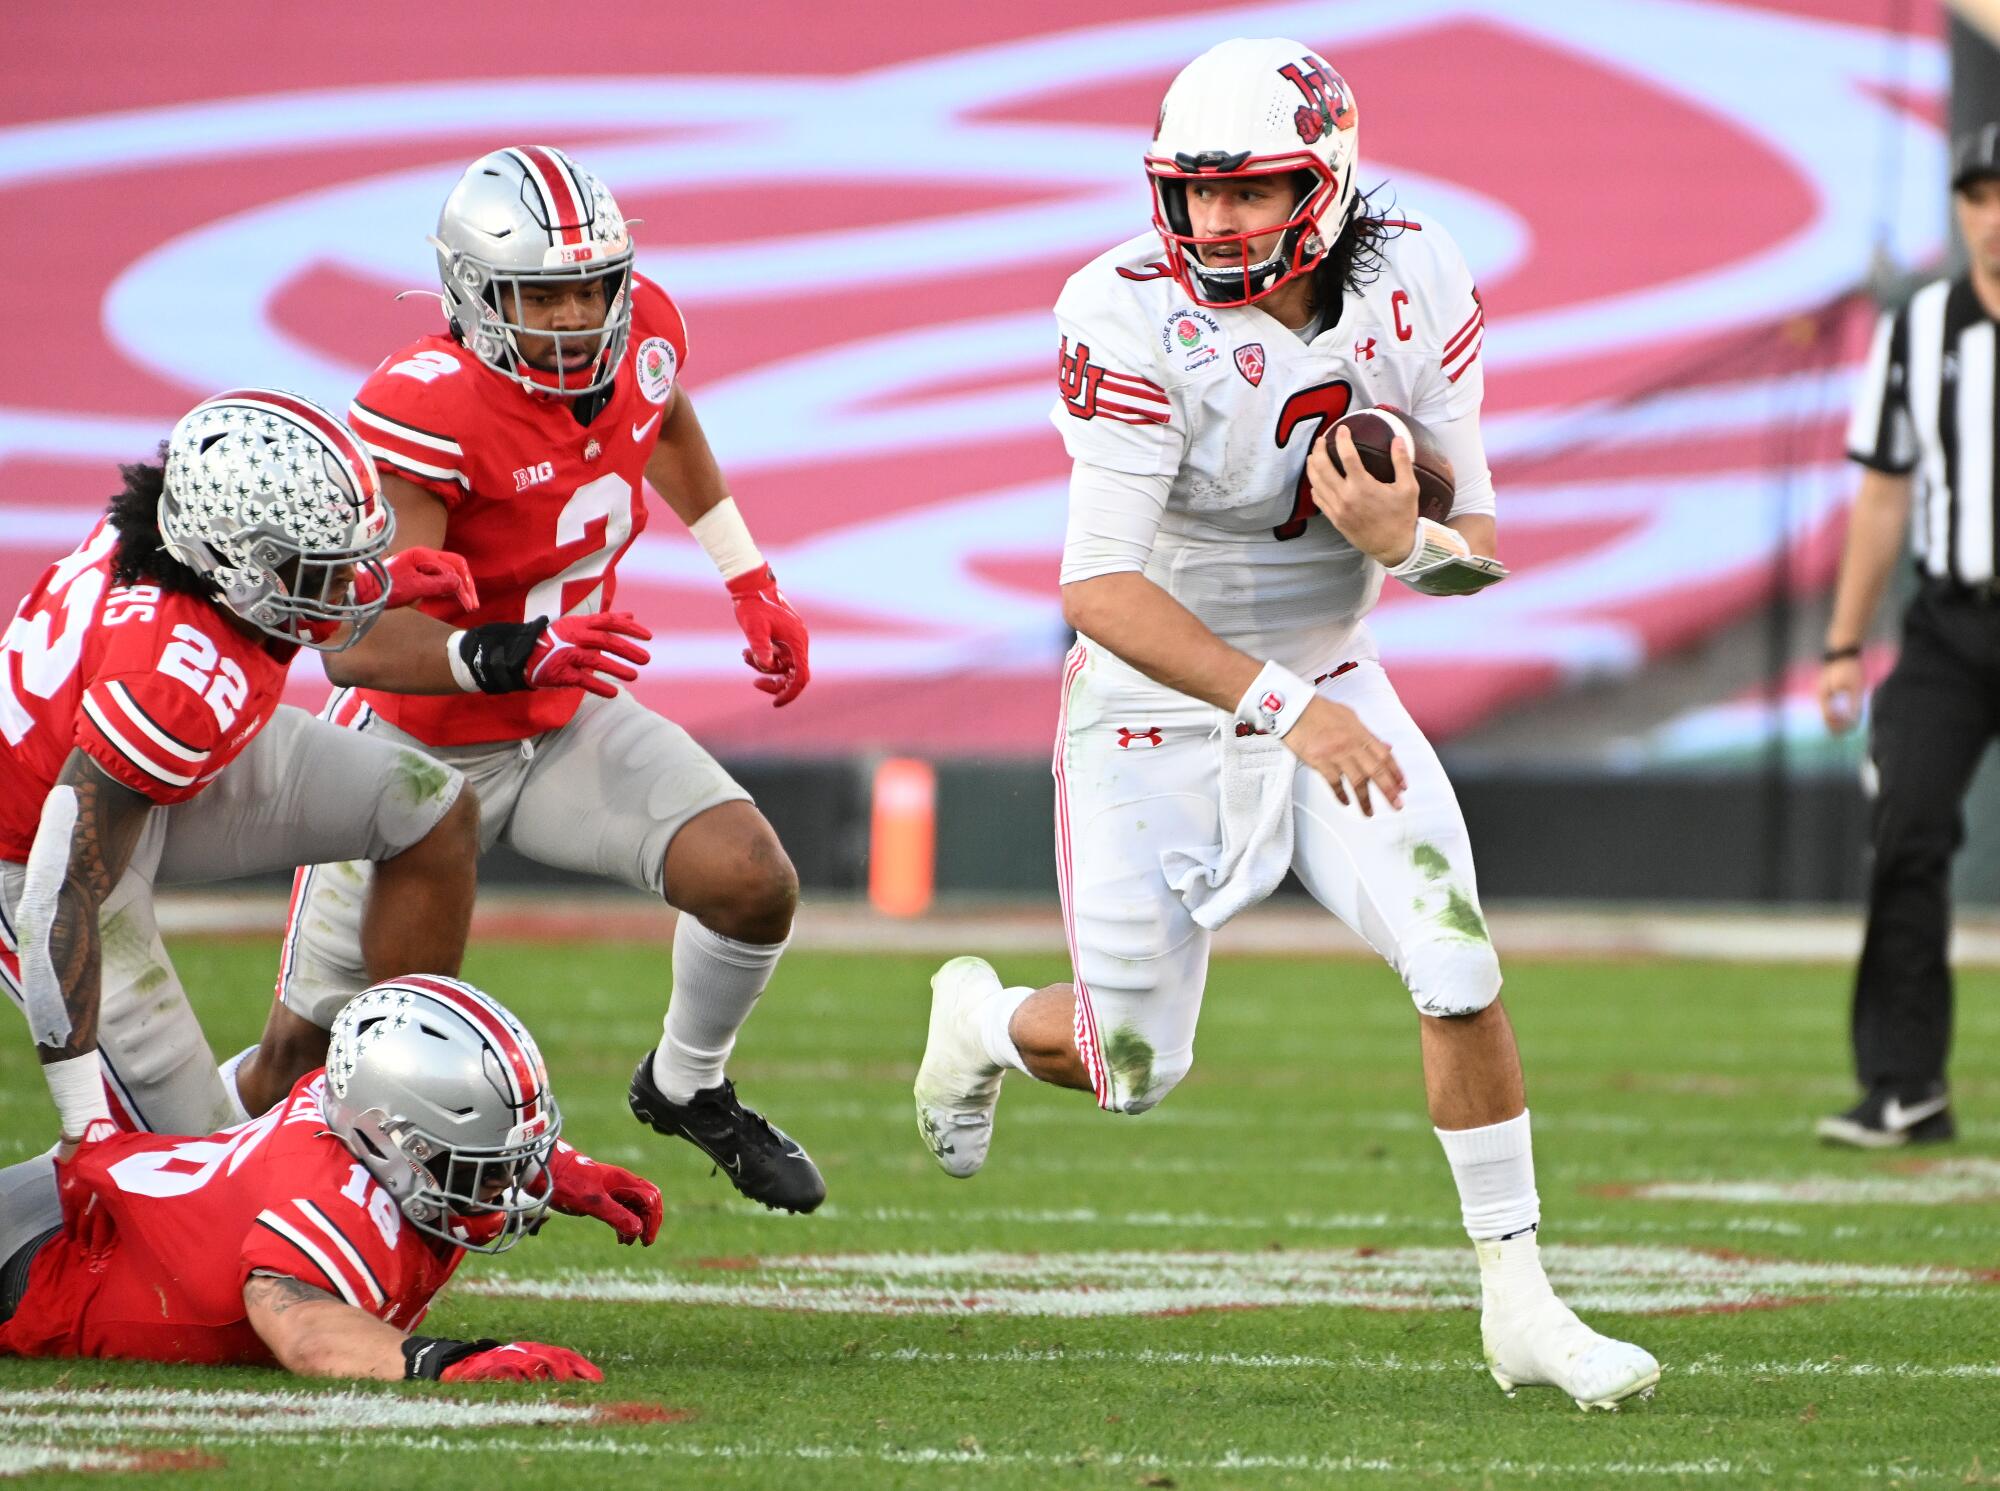 Utah quarterback Cameron Rising sprints past the Ohio State defense to score a touchdown.